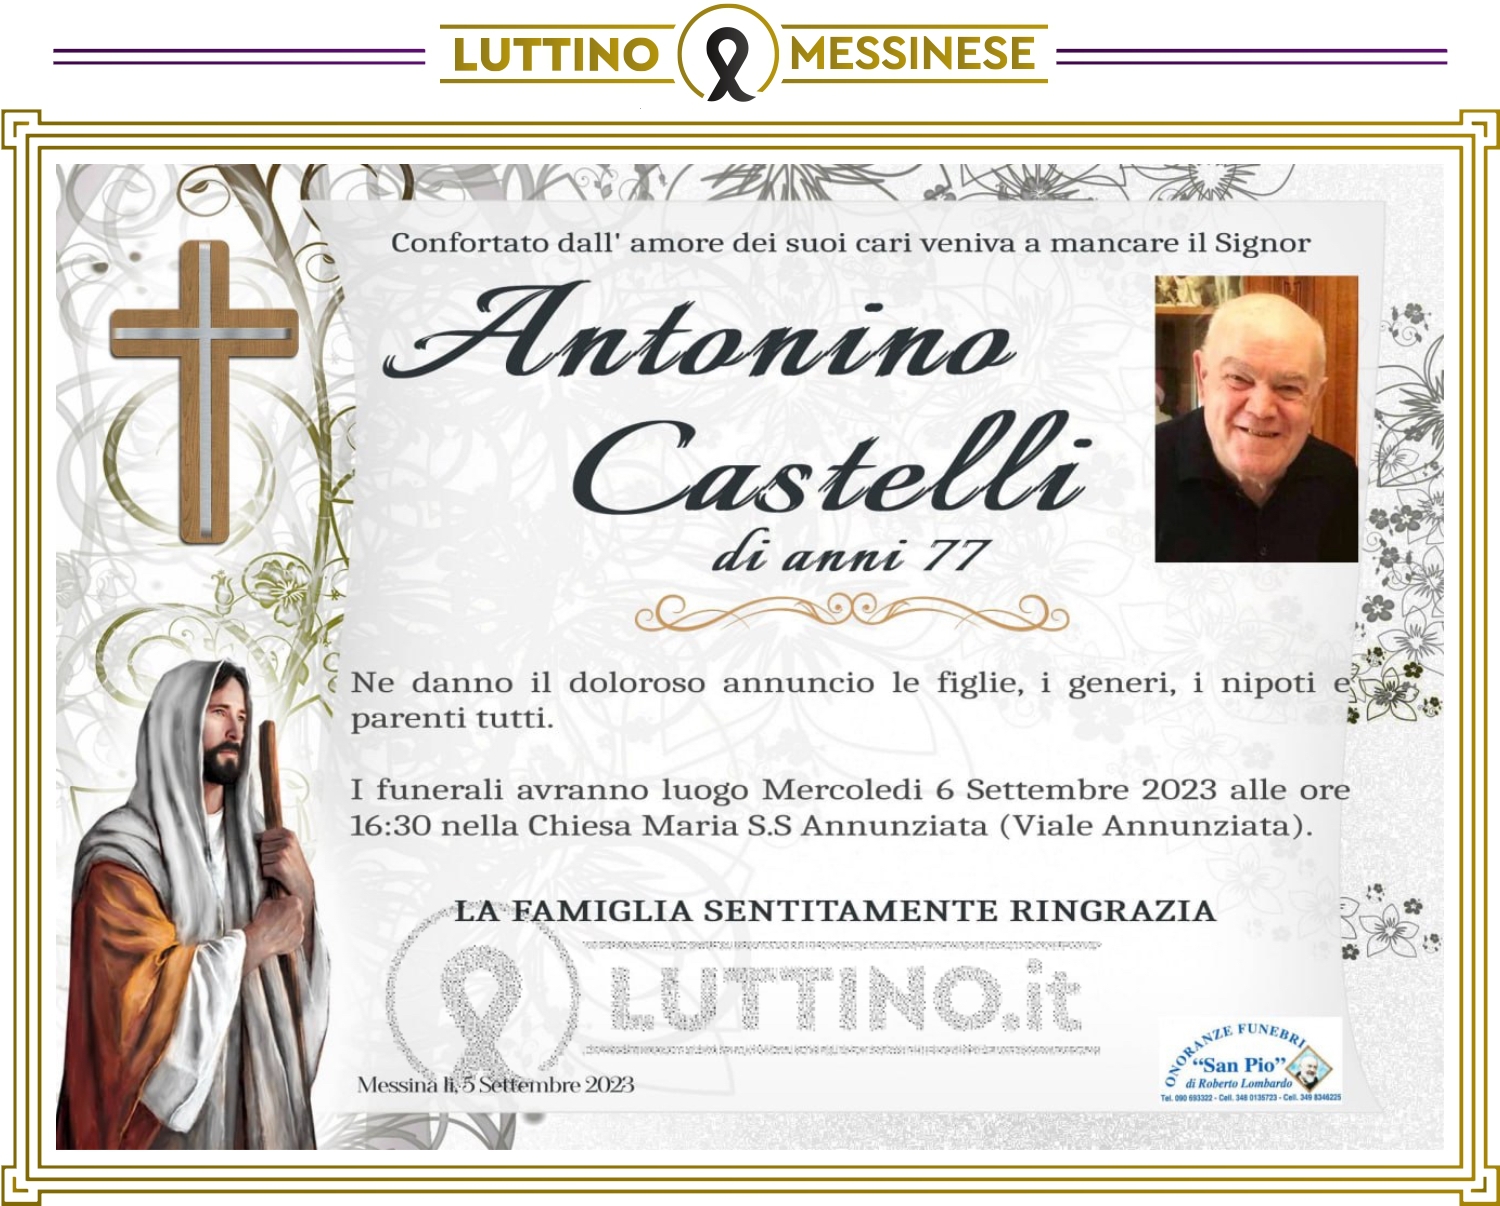 Antonino Castelli